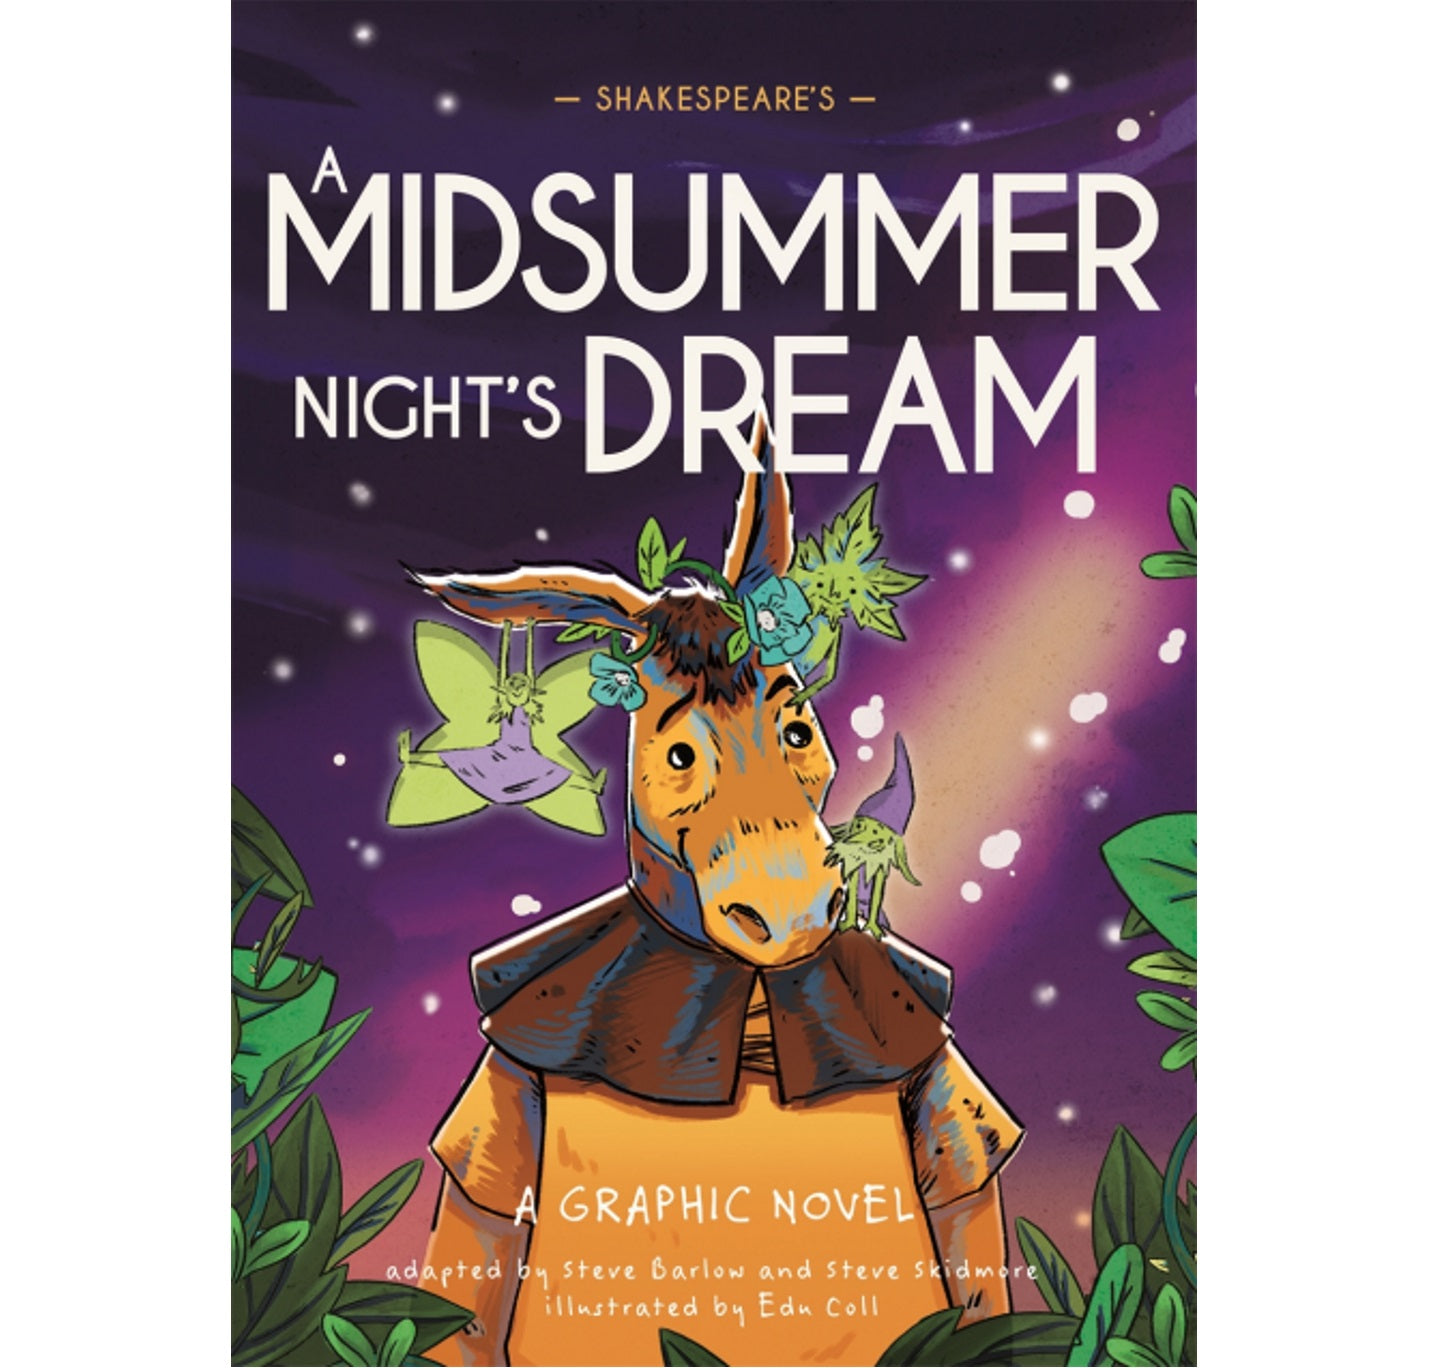 Shakespeare's A Midsummer Night's Dream: A Graphic Novel